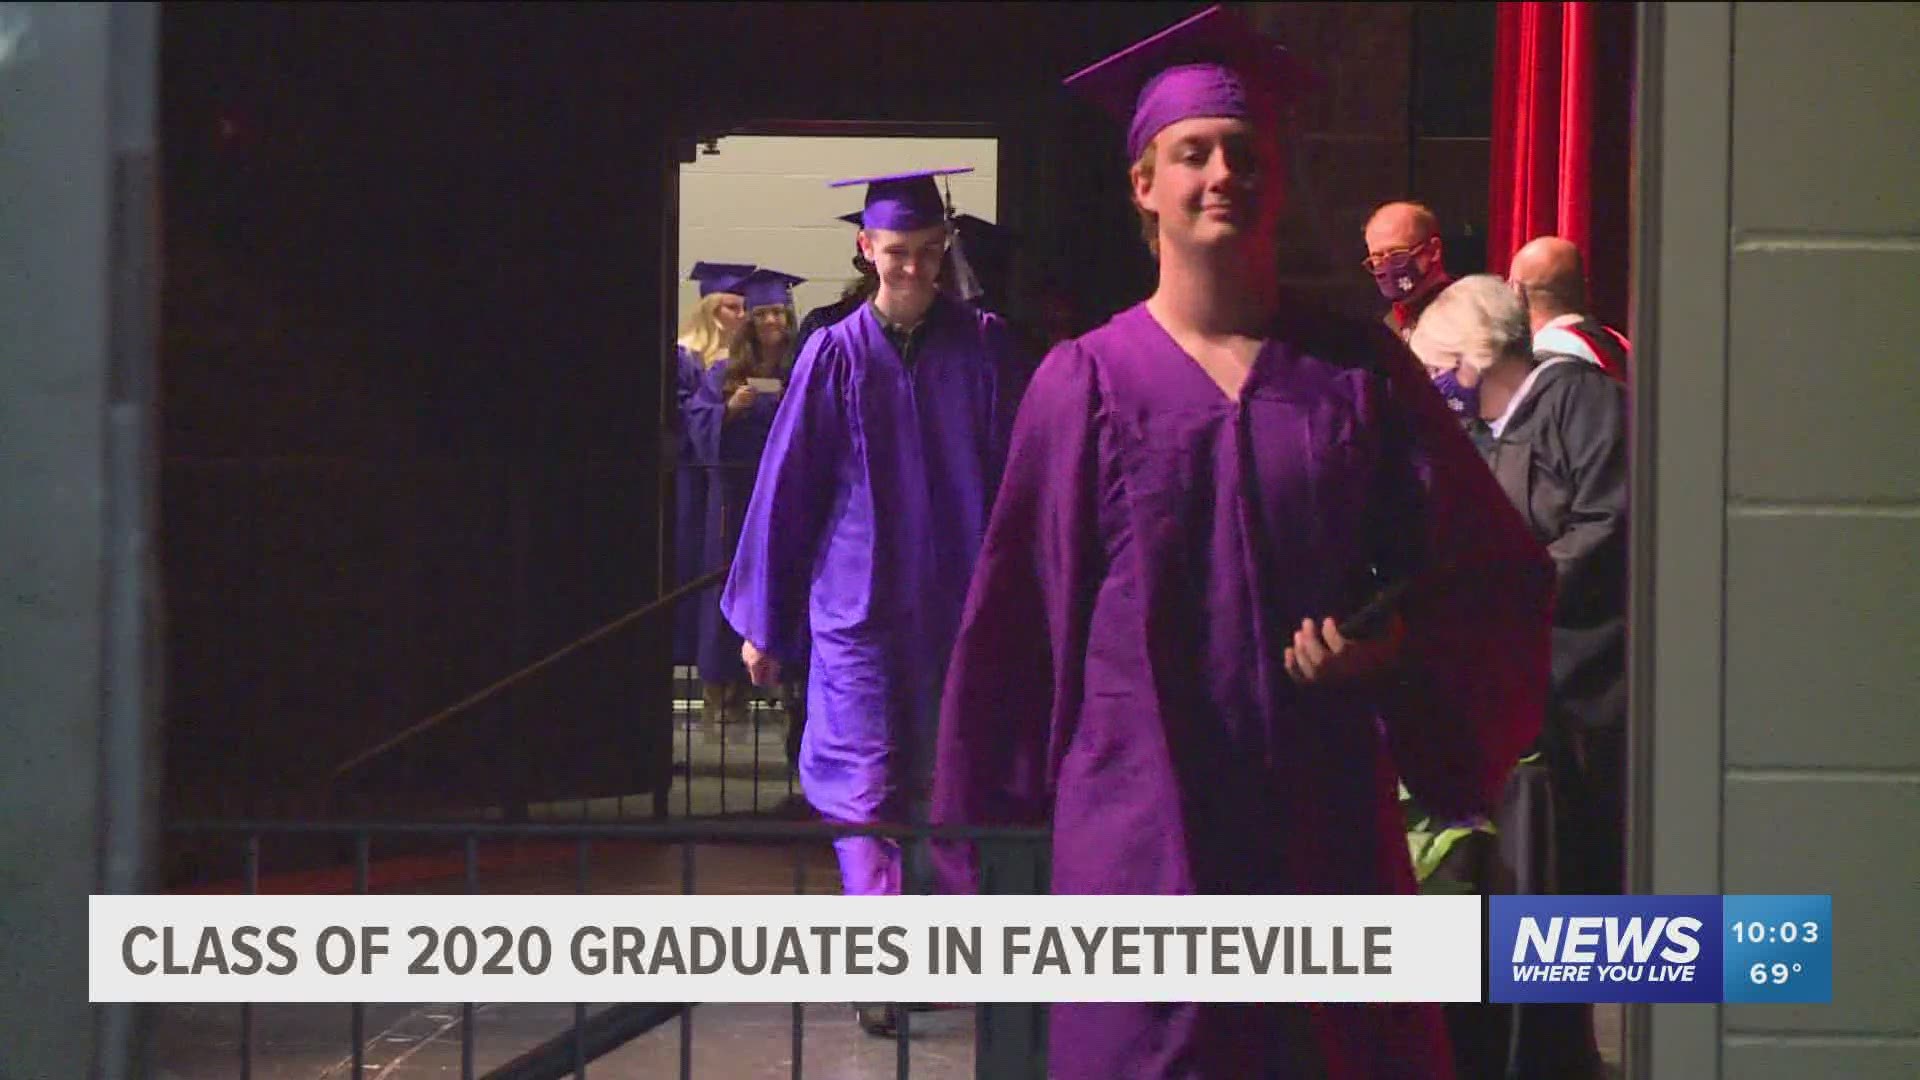 Fayetteville holds graduation ceremony despite COVID19 pandemic